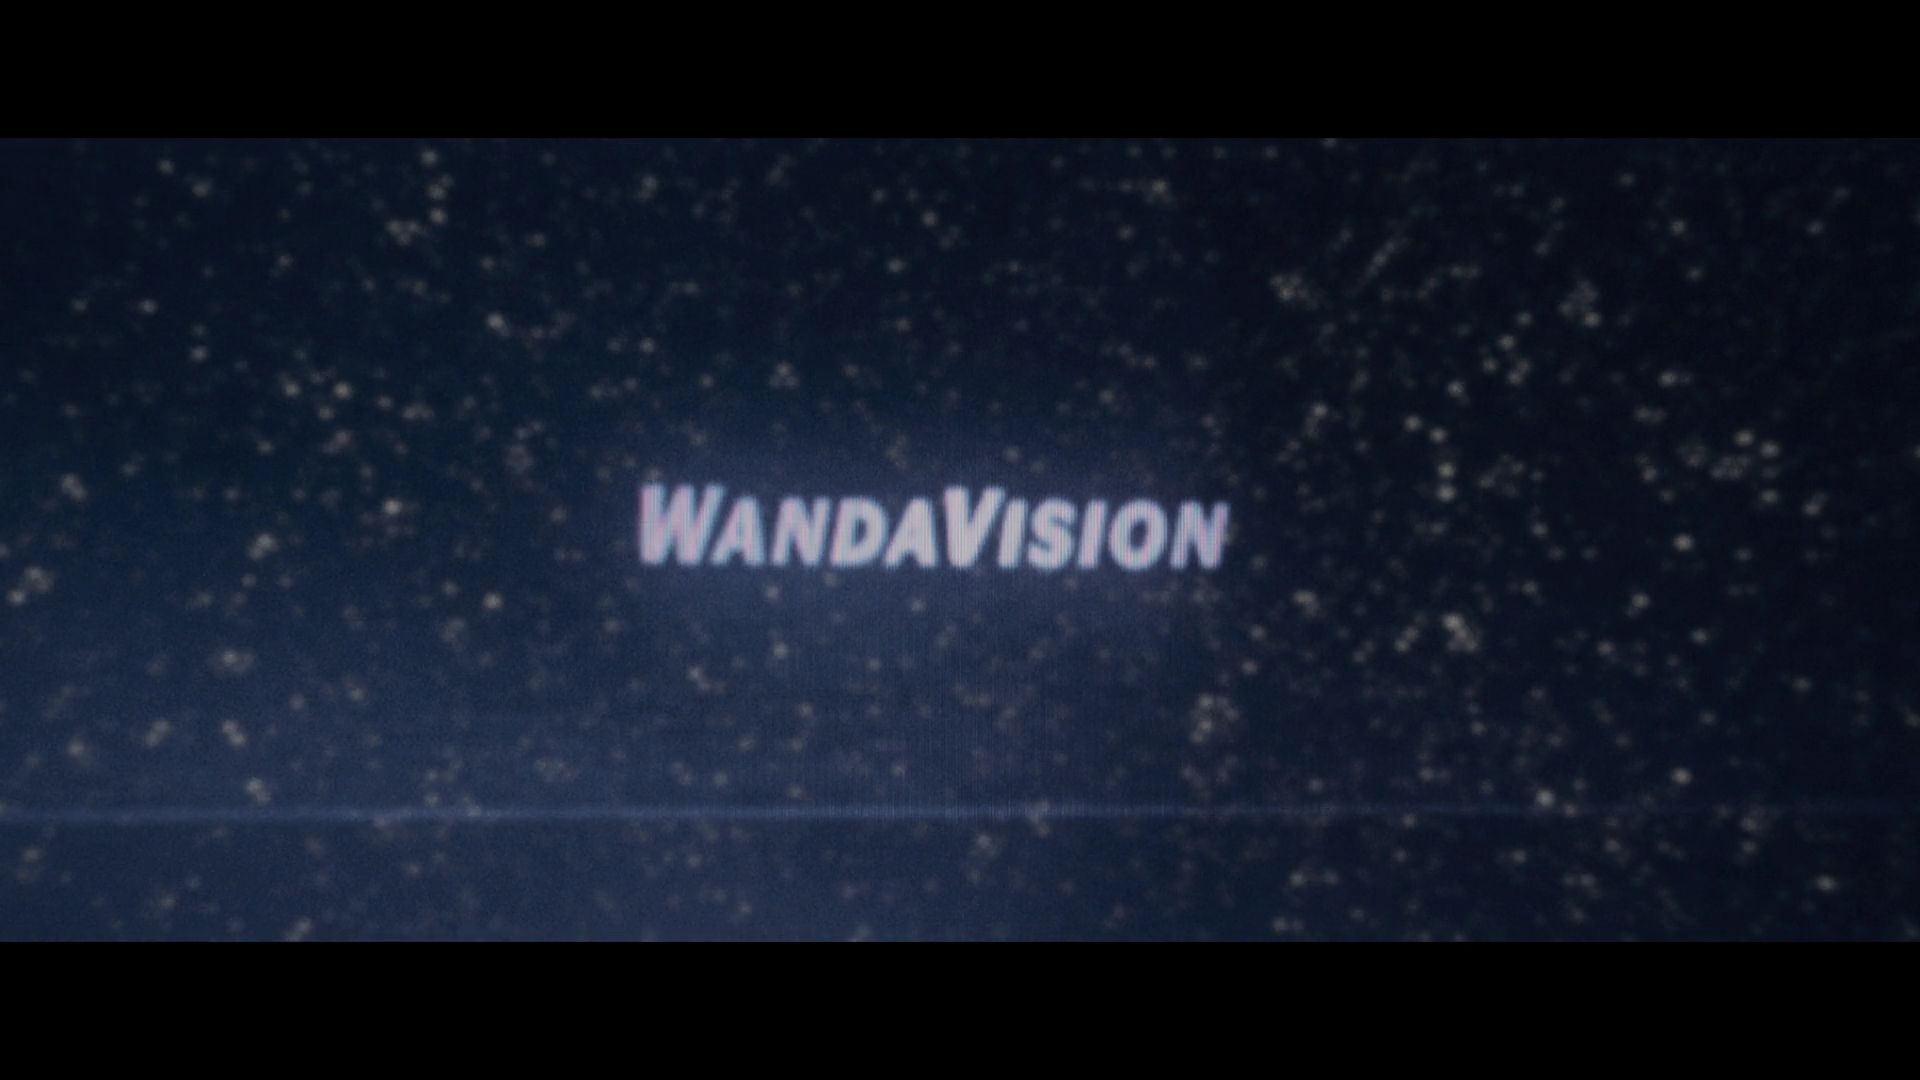 WandaVision-S01E07-395.jpg